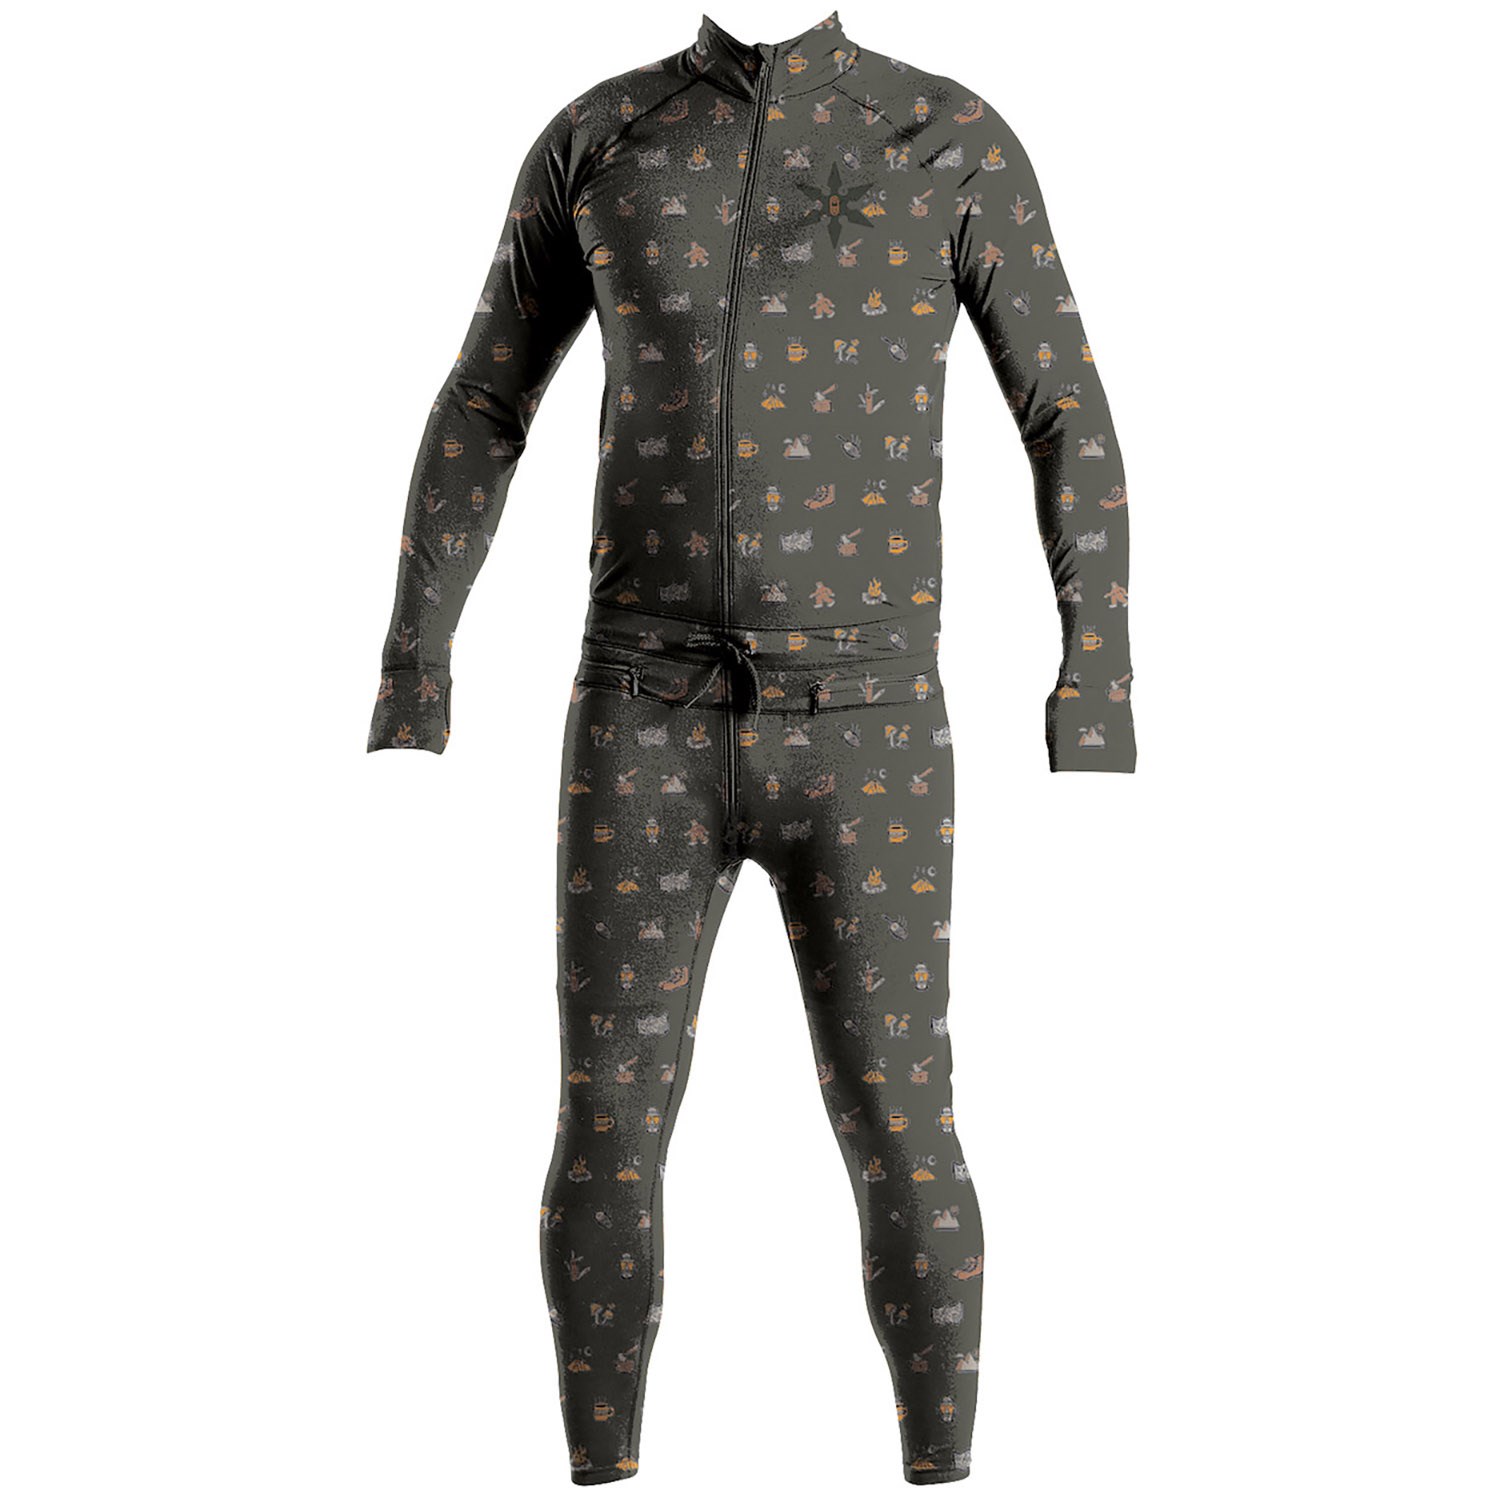 https://images.evo.com/imgp/zoom/238119/1054896/airblaster-hoodless-ninja-suit-men-s-.jpg